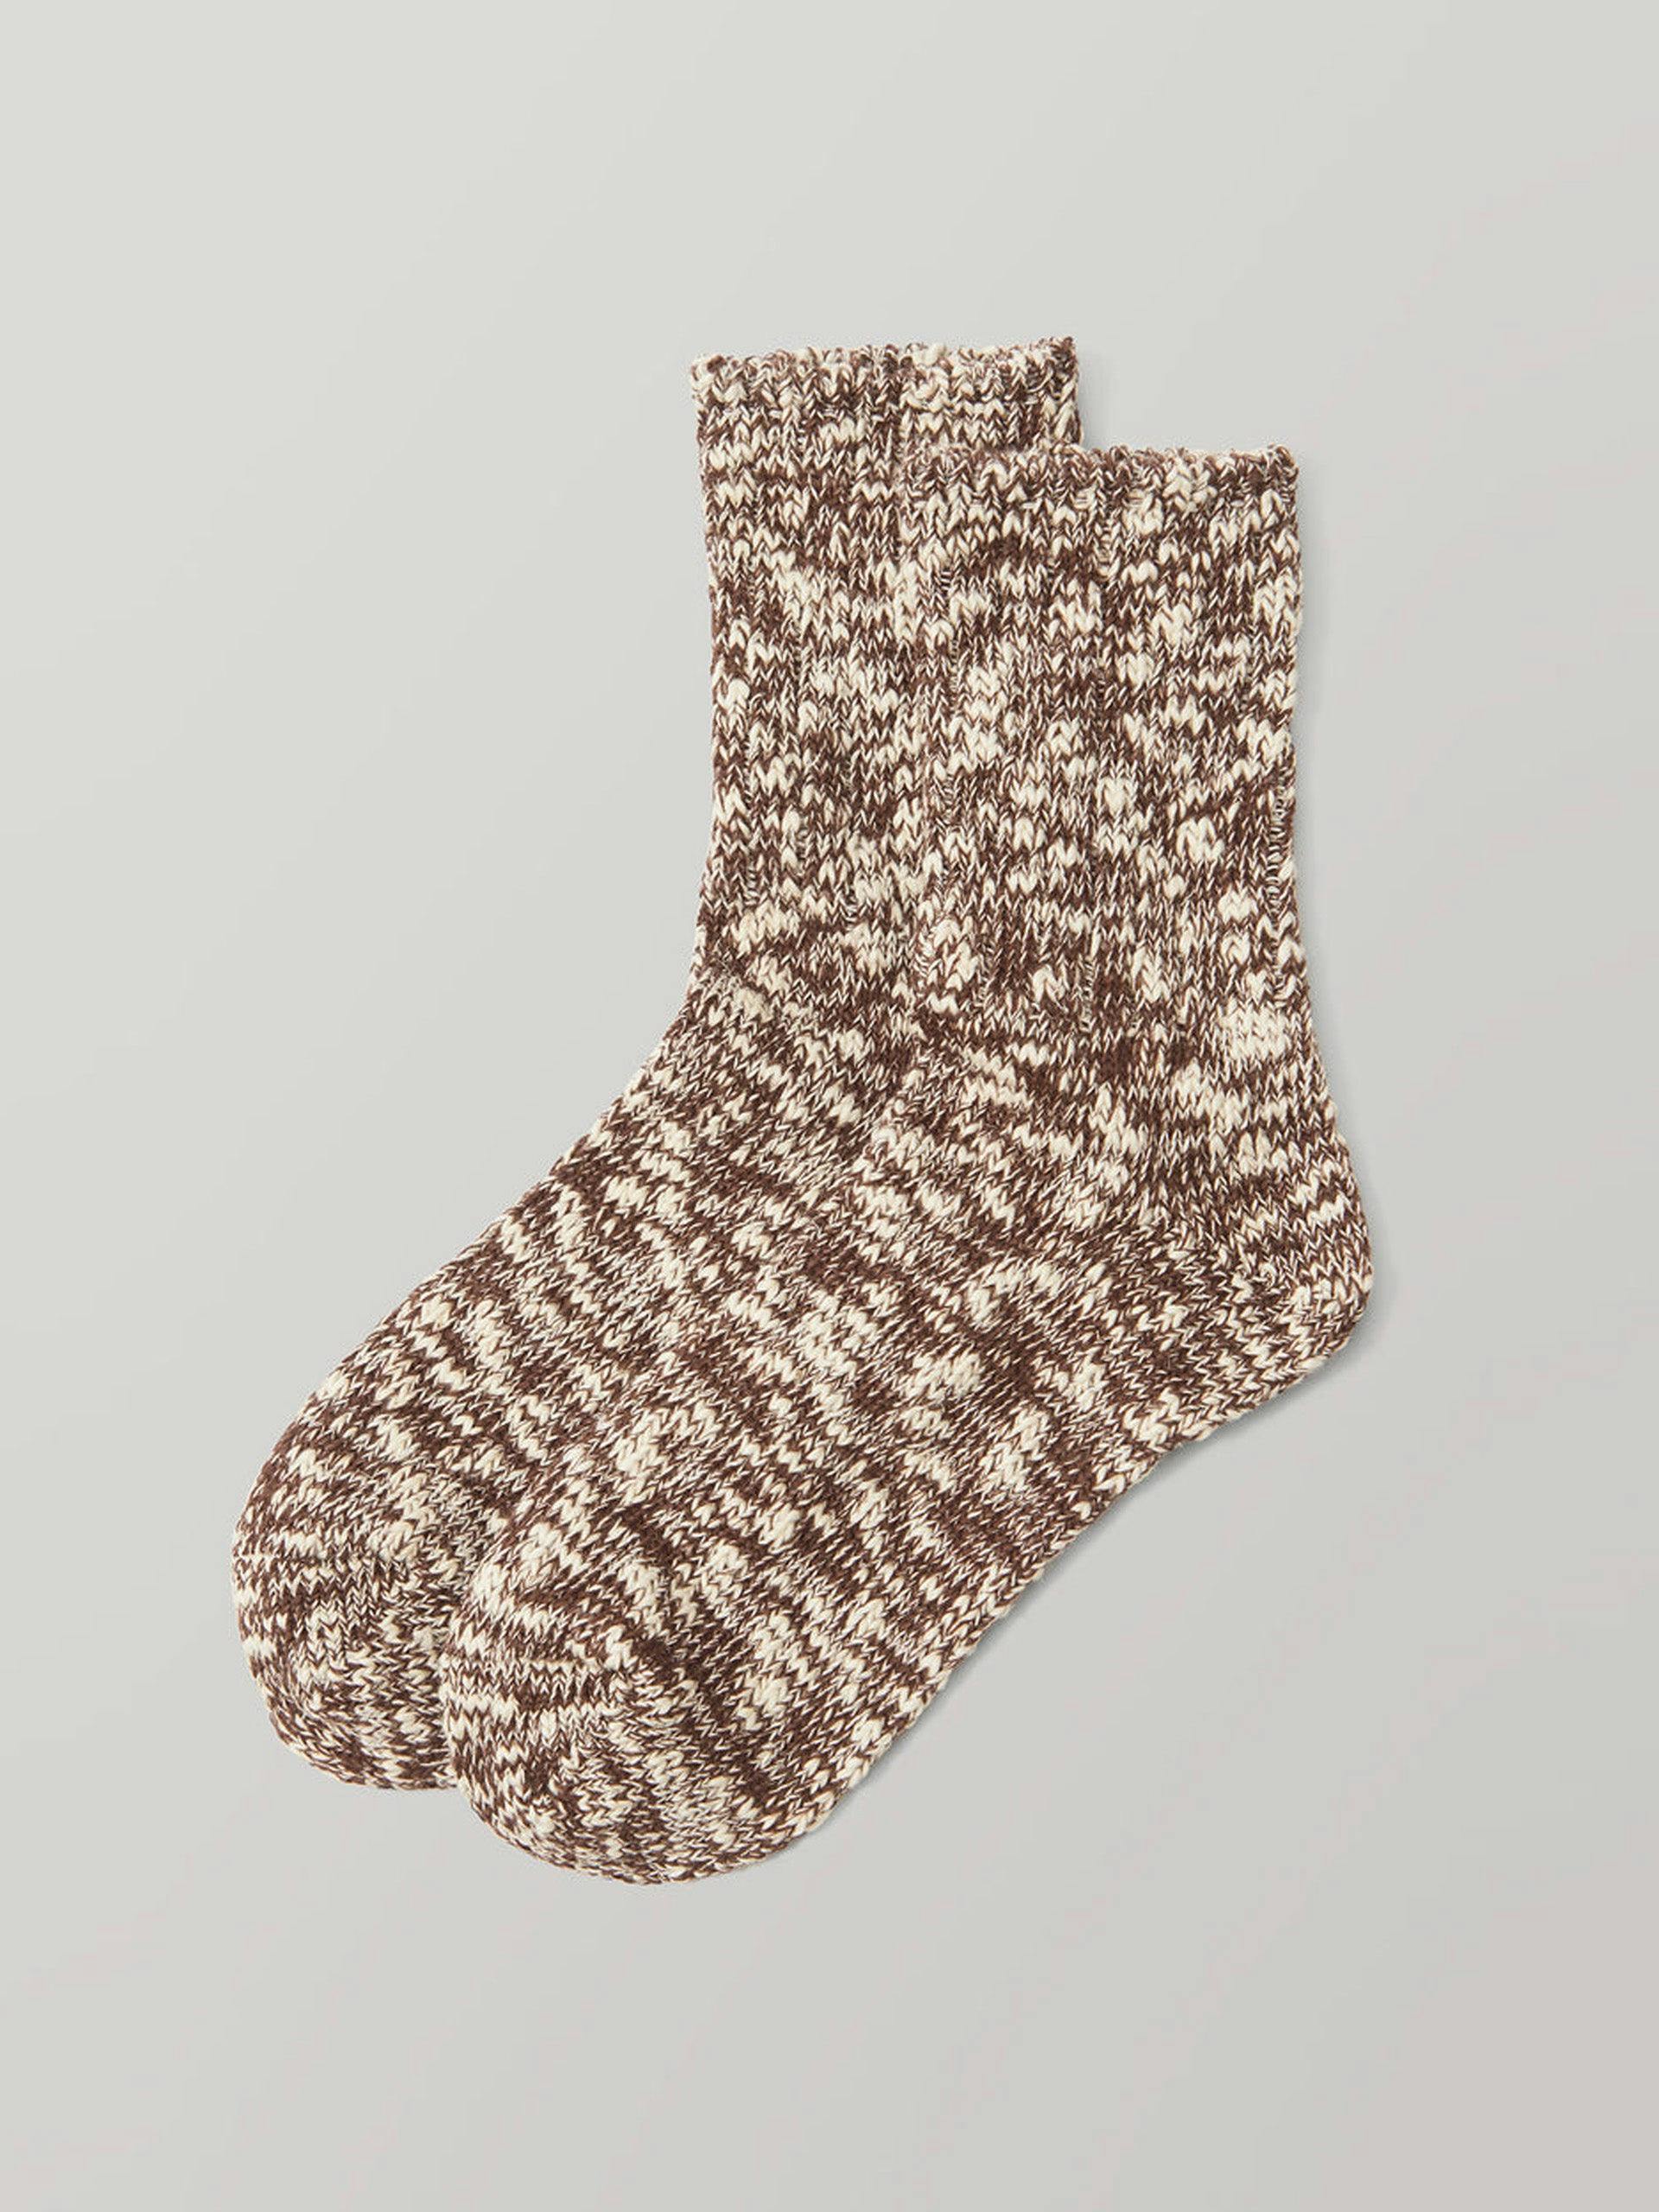 Mauna kea Japanese socks in brown